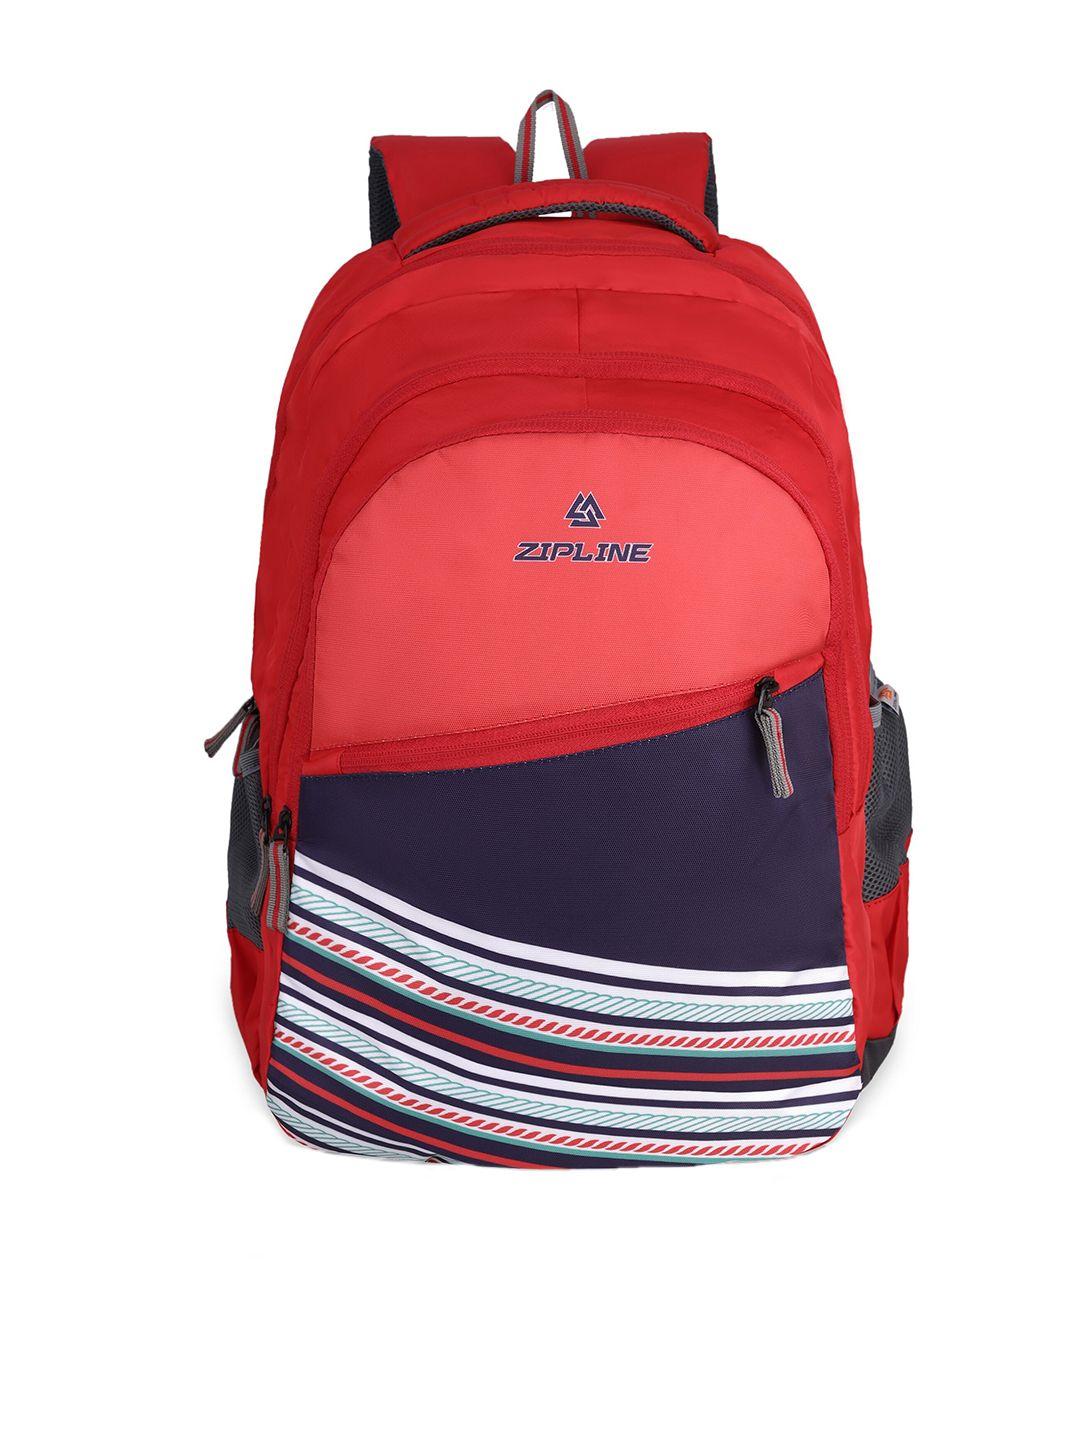 zipline unisex graphic backpack